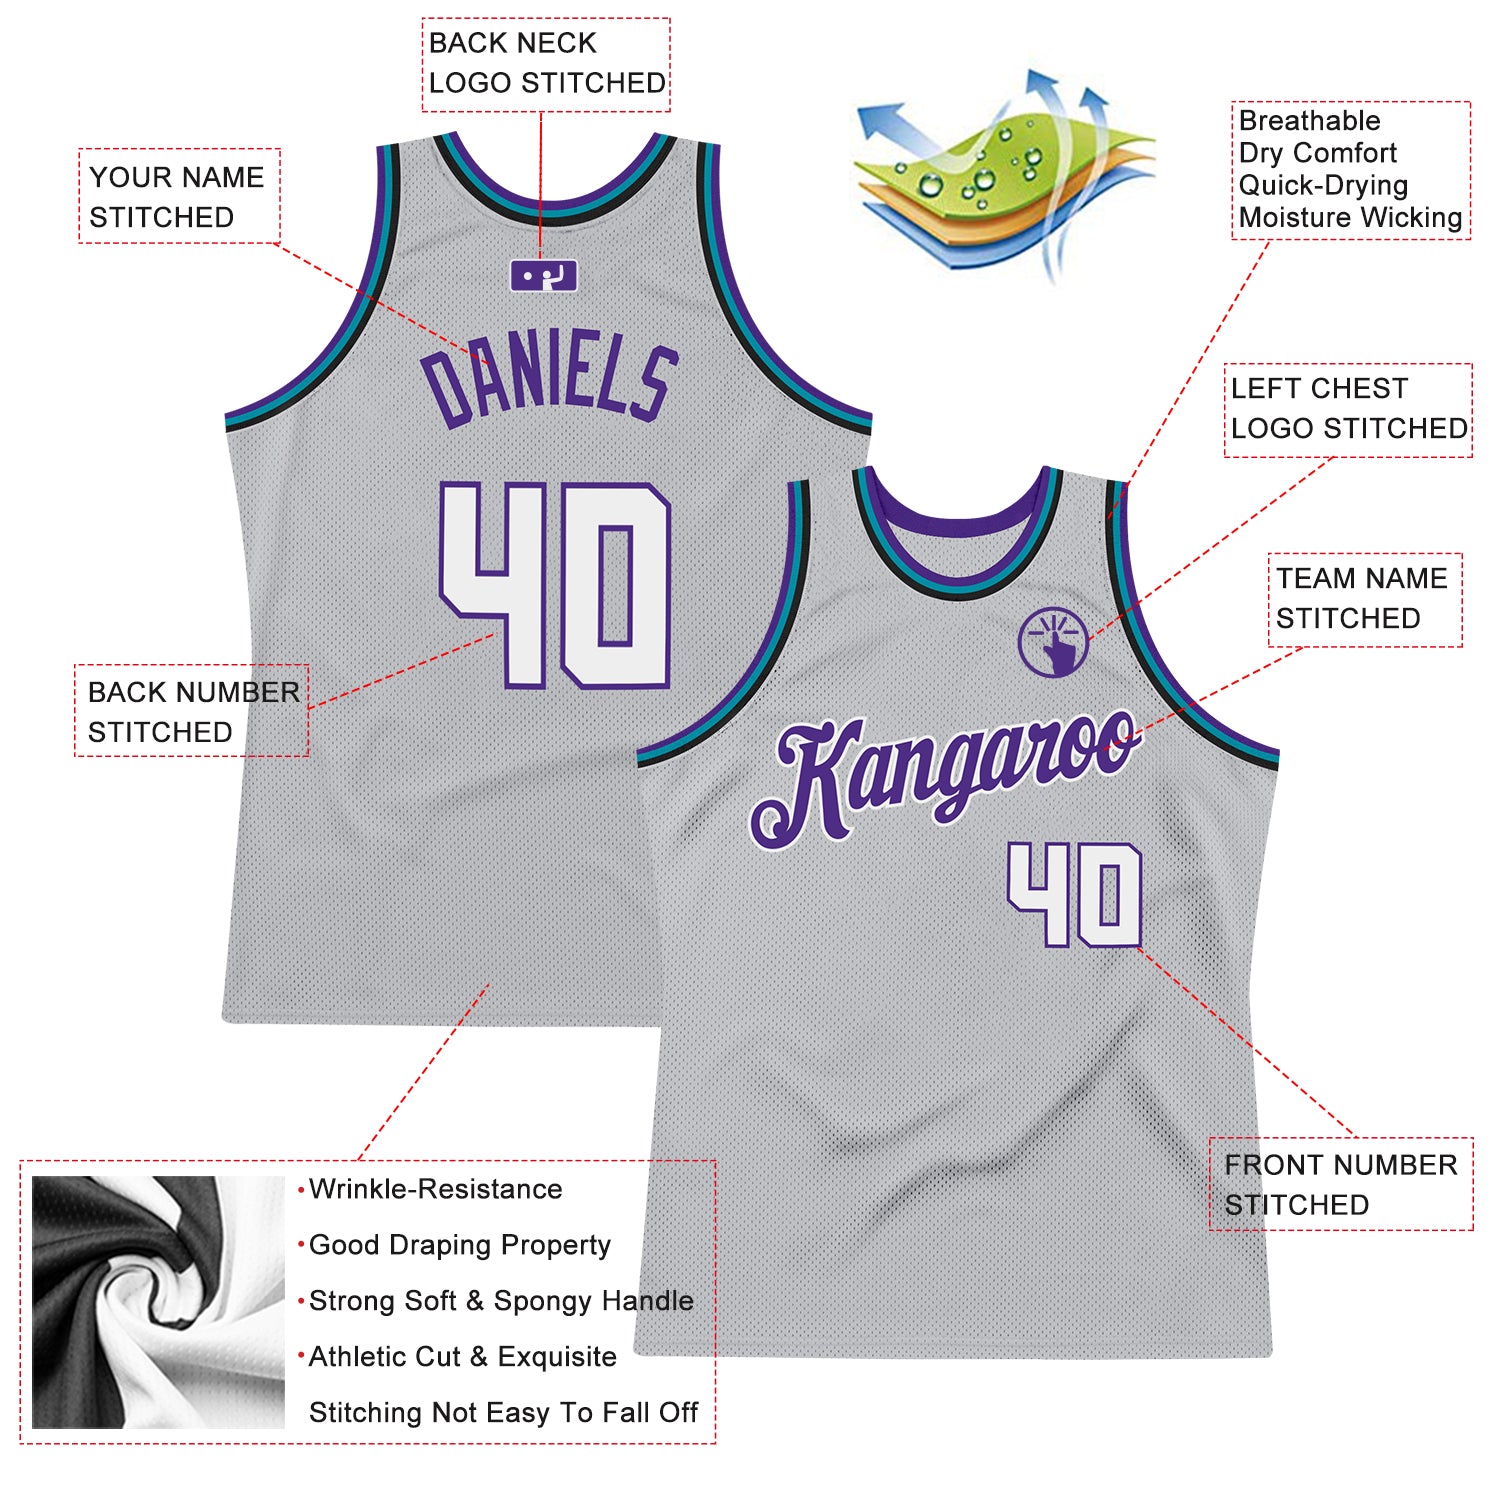 Gray Sacramento Kings NBA Jerseys for sale